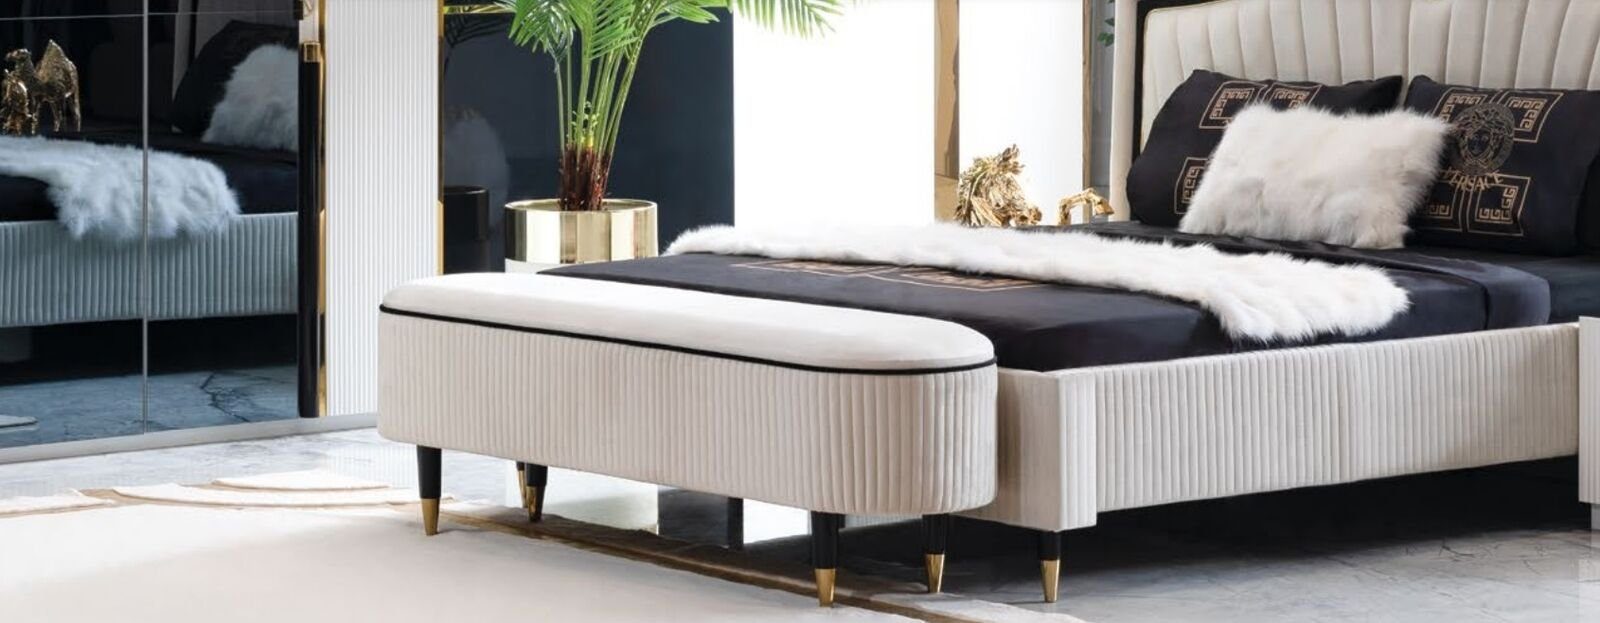 Bettbänke online kaufen | OTTO